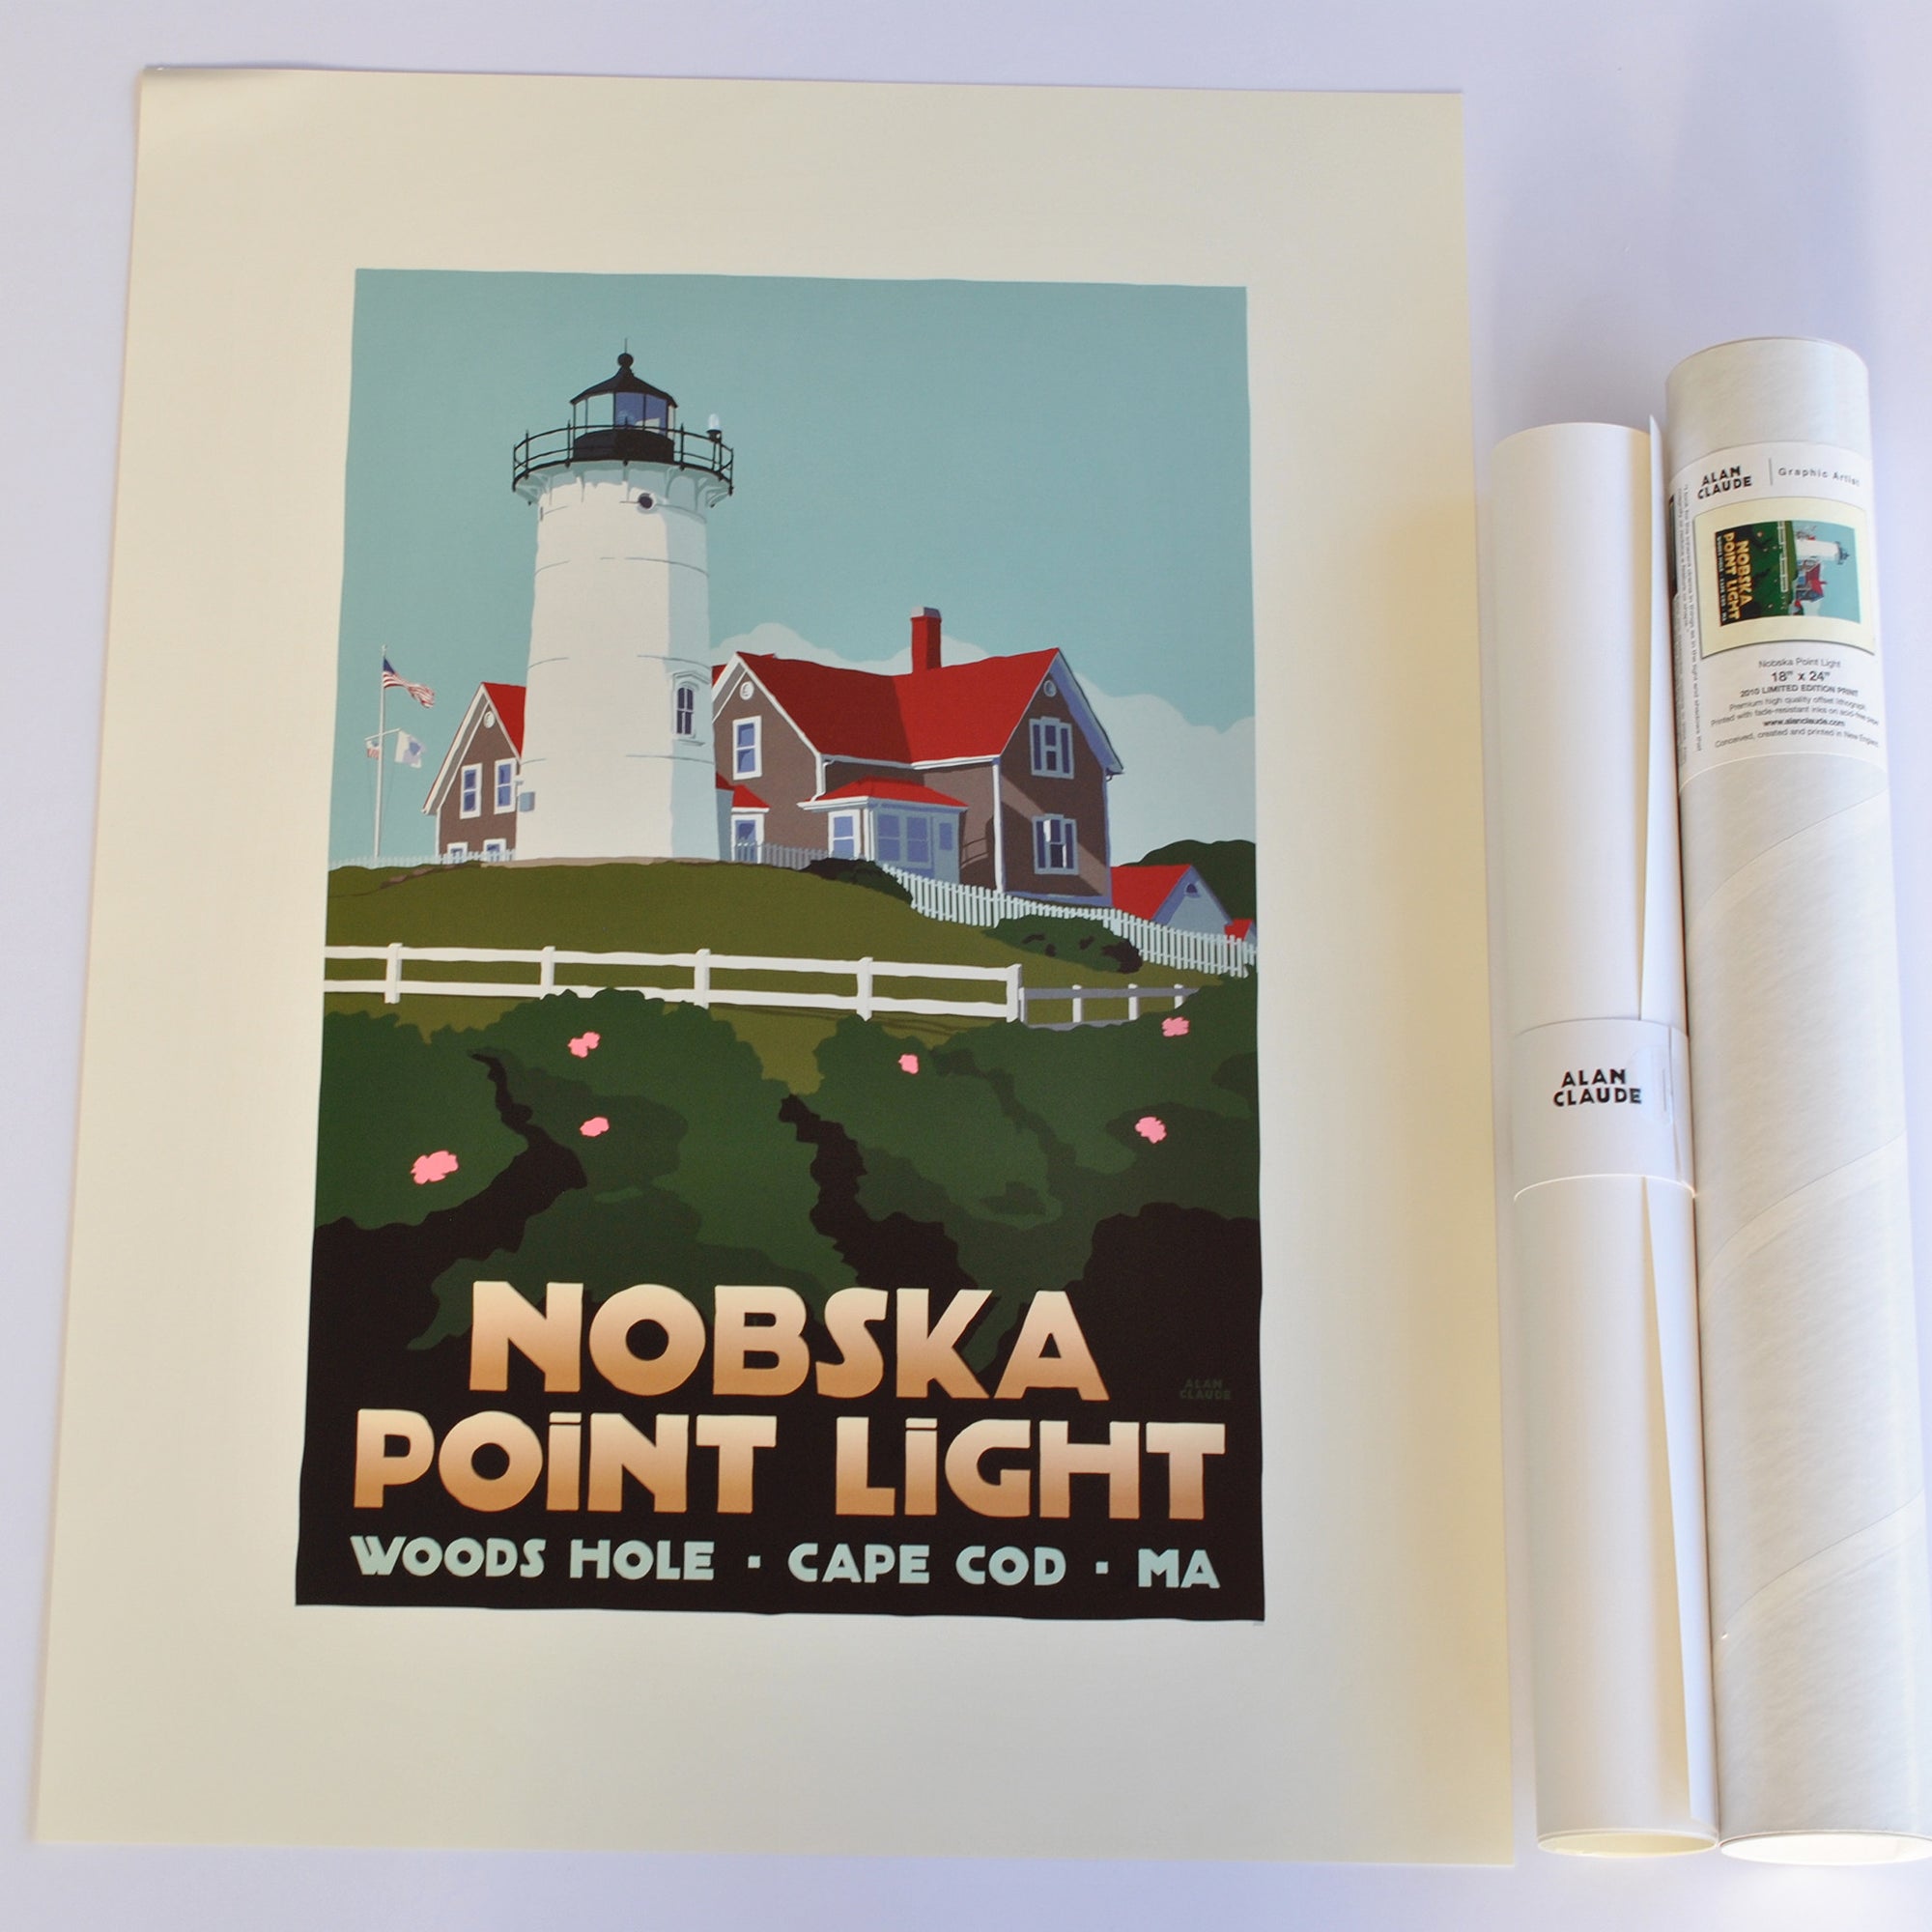 Nobska Point Light Art Print 18" x 24" Travel Poster By Alan Claude - Massachusetts